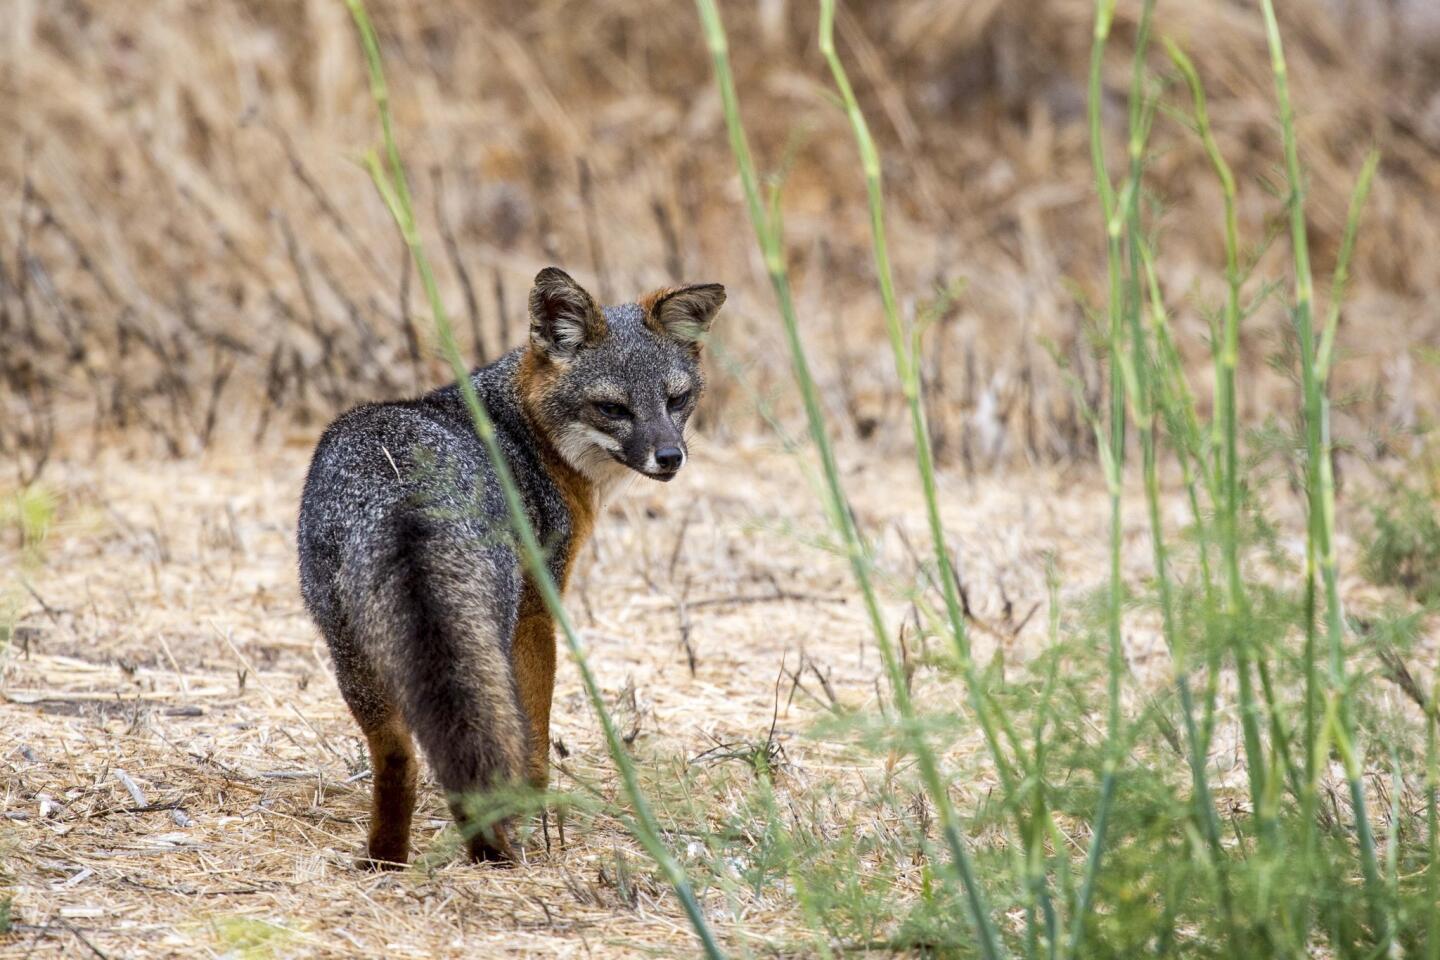 The Santa Cruz Island fox, one of the subspecies of fox native to California’s Channel Islands, on Santa Cruz Island.